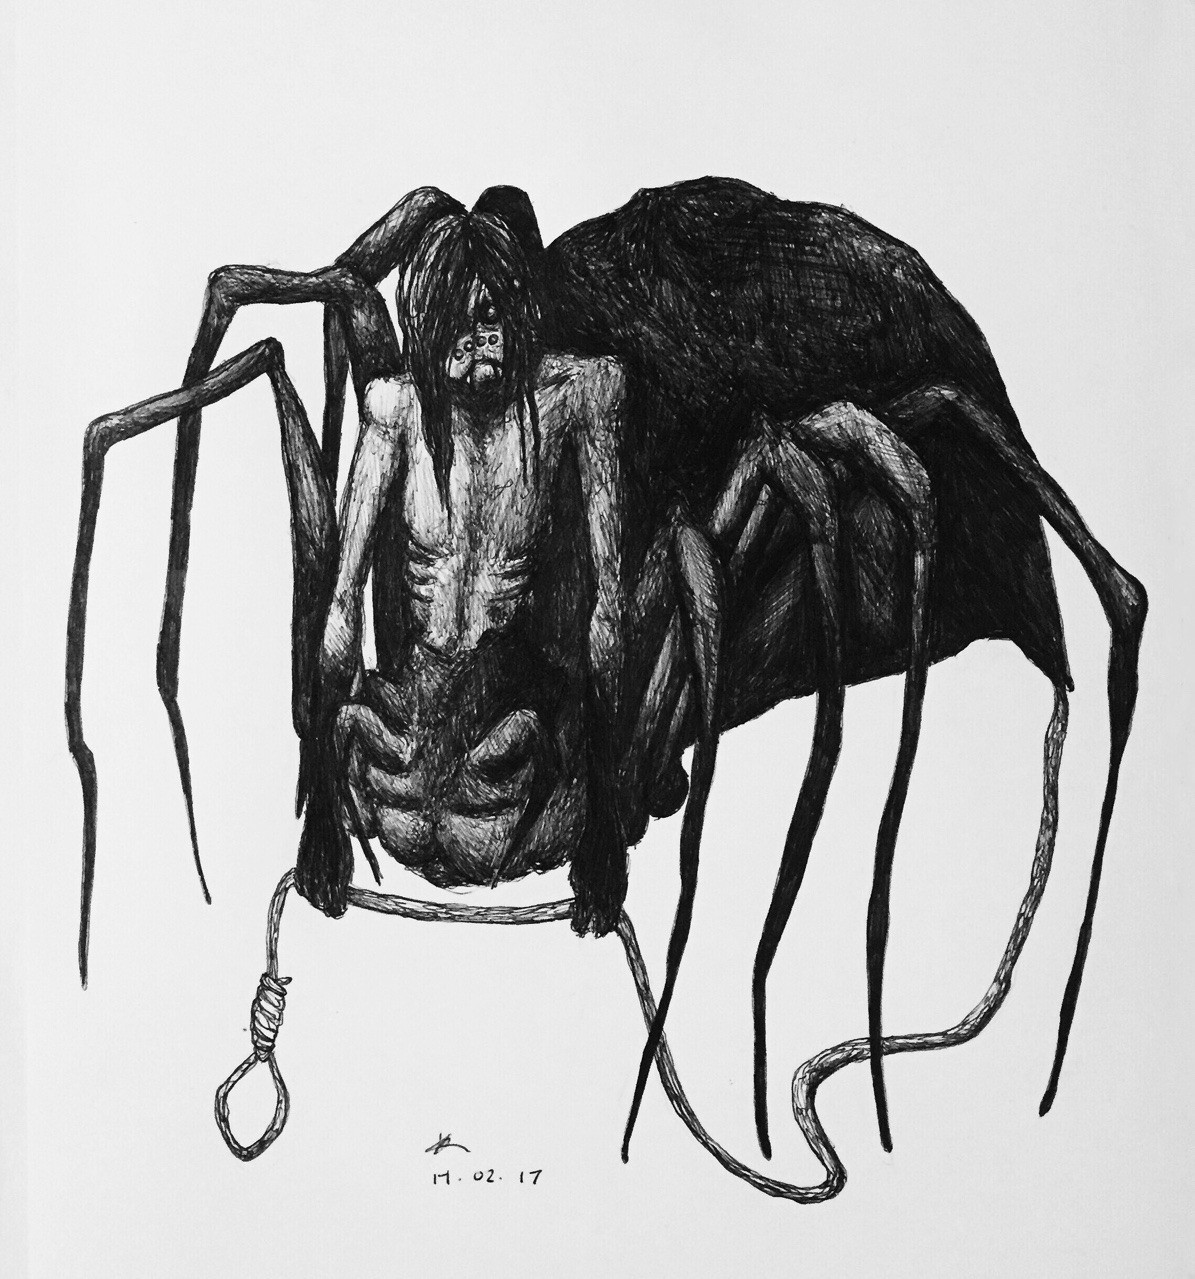 Concept art for a half human, half spider monster. 